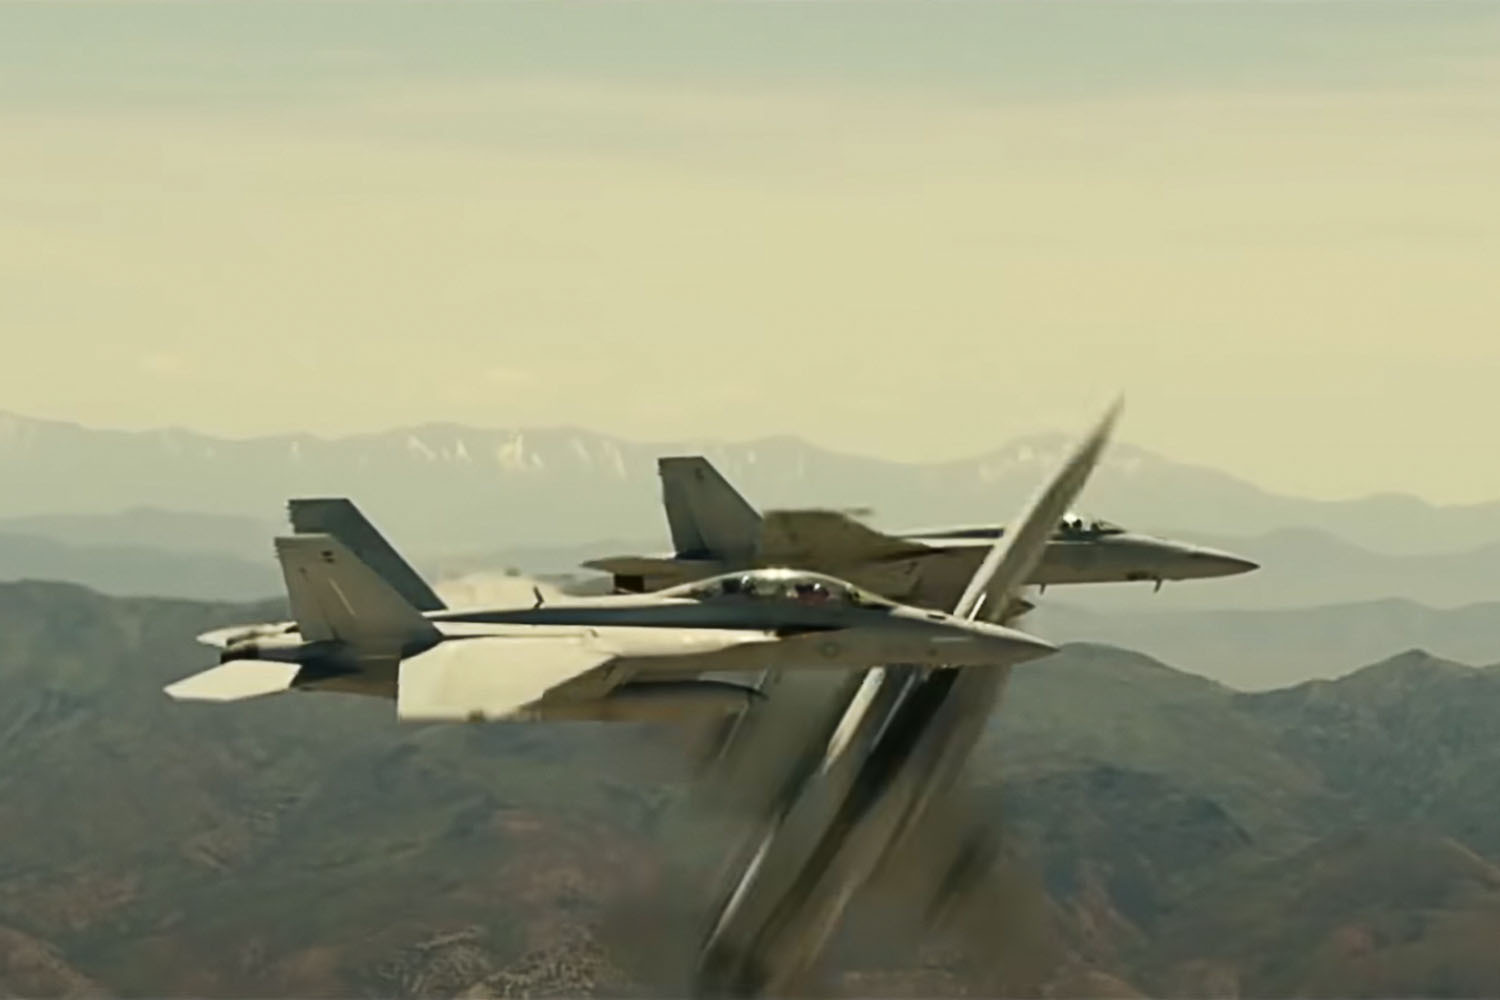 Real Top Gun Grad the Movies' Flying Scenes - InsideHook